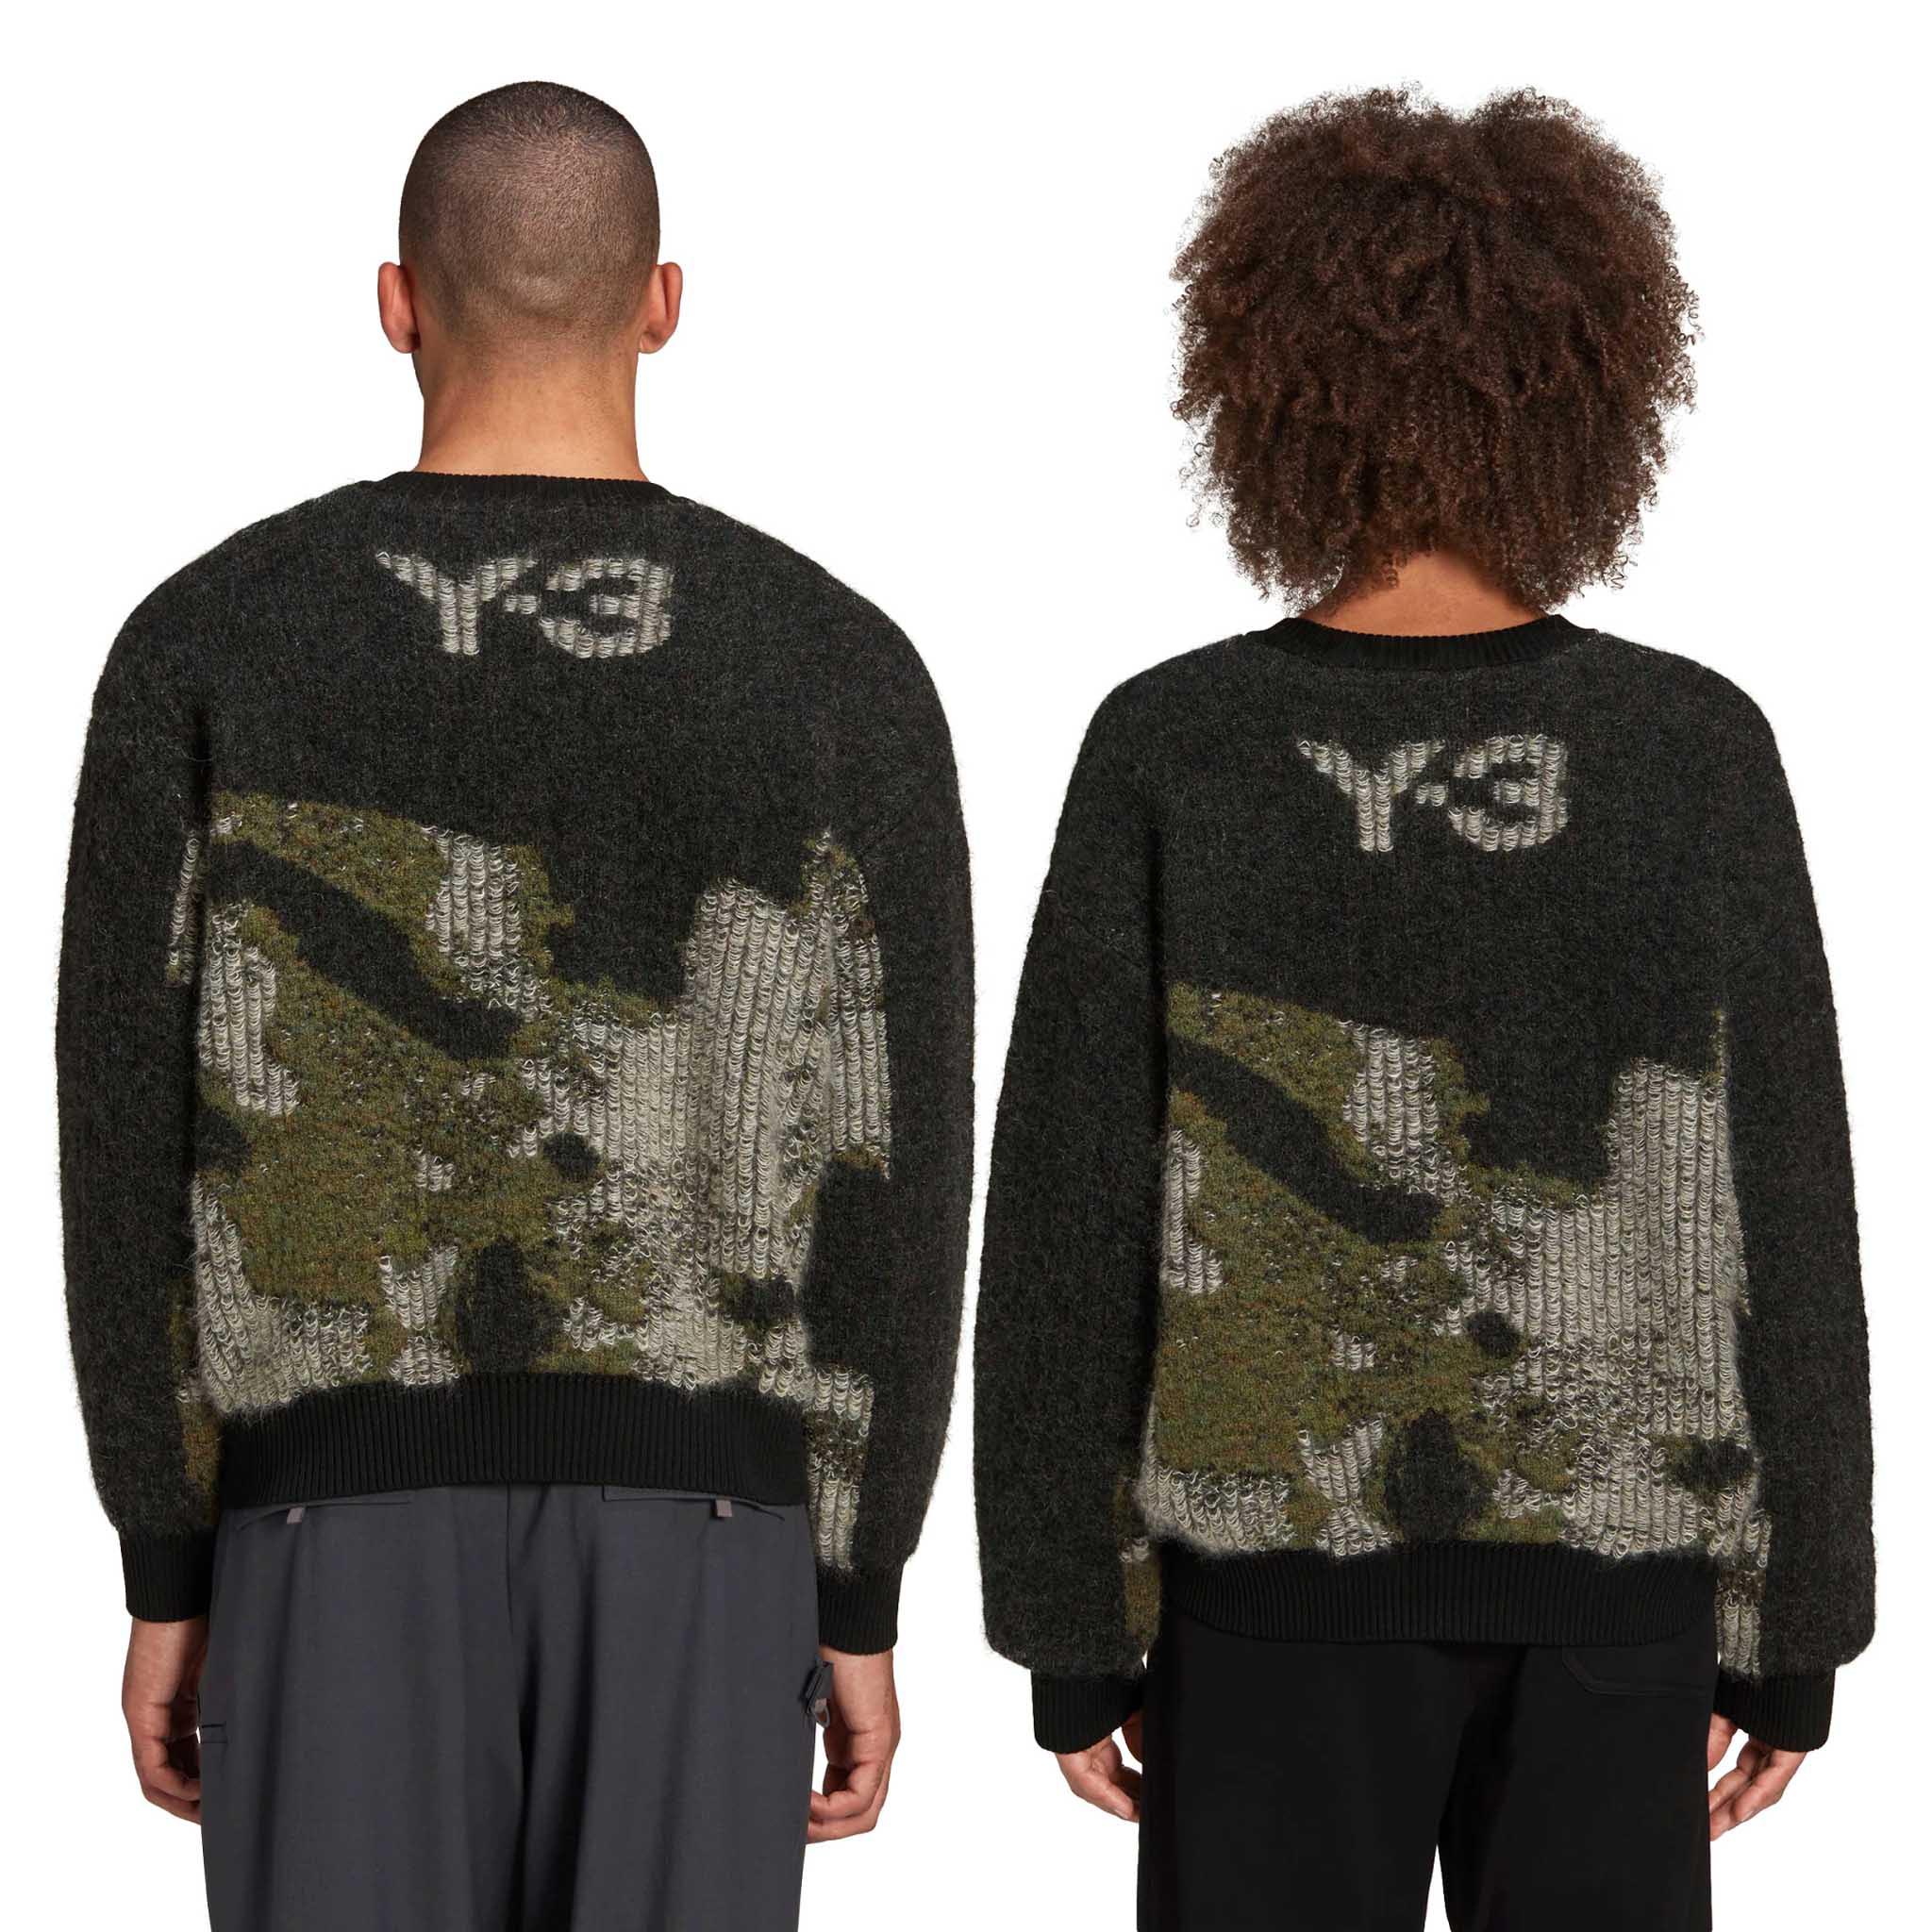 ADIDAS Y-3 CH1 Camo Knit Crew Sweater Black/Green | SNEAKERBOX